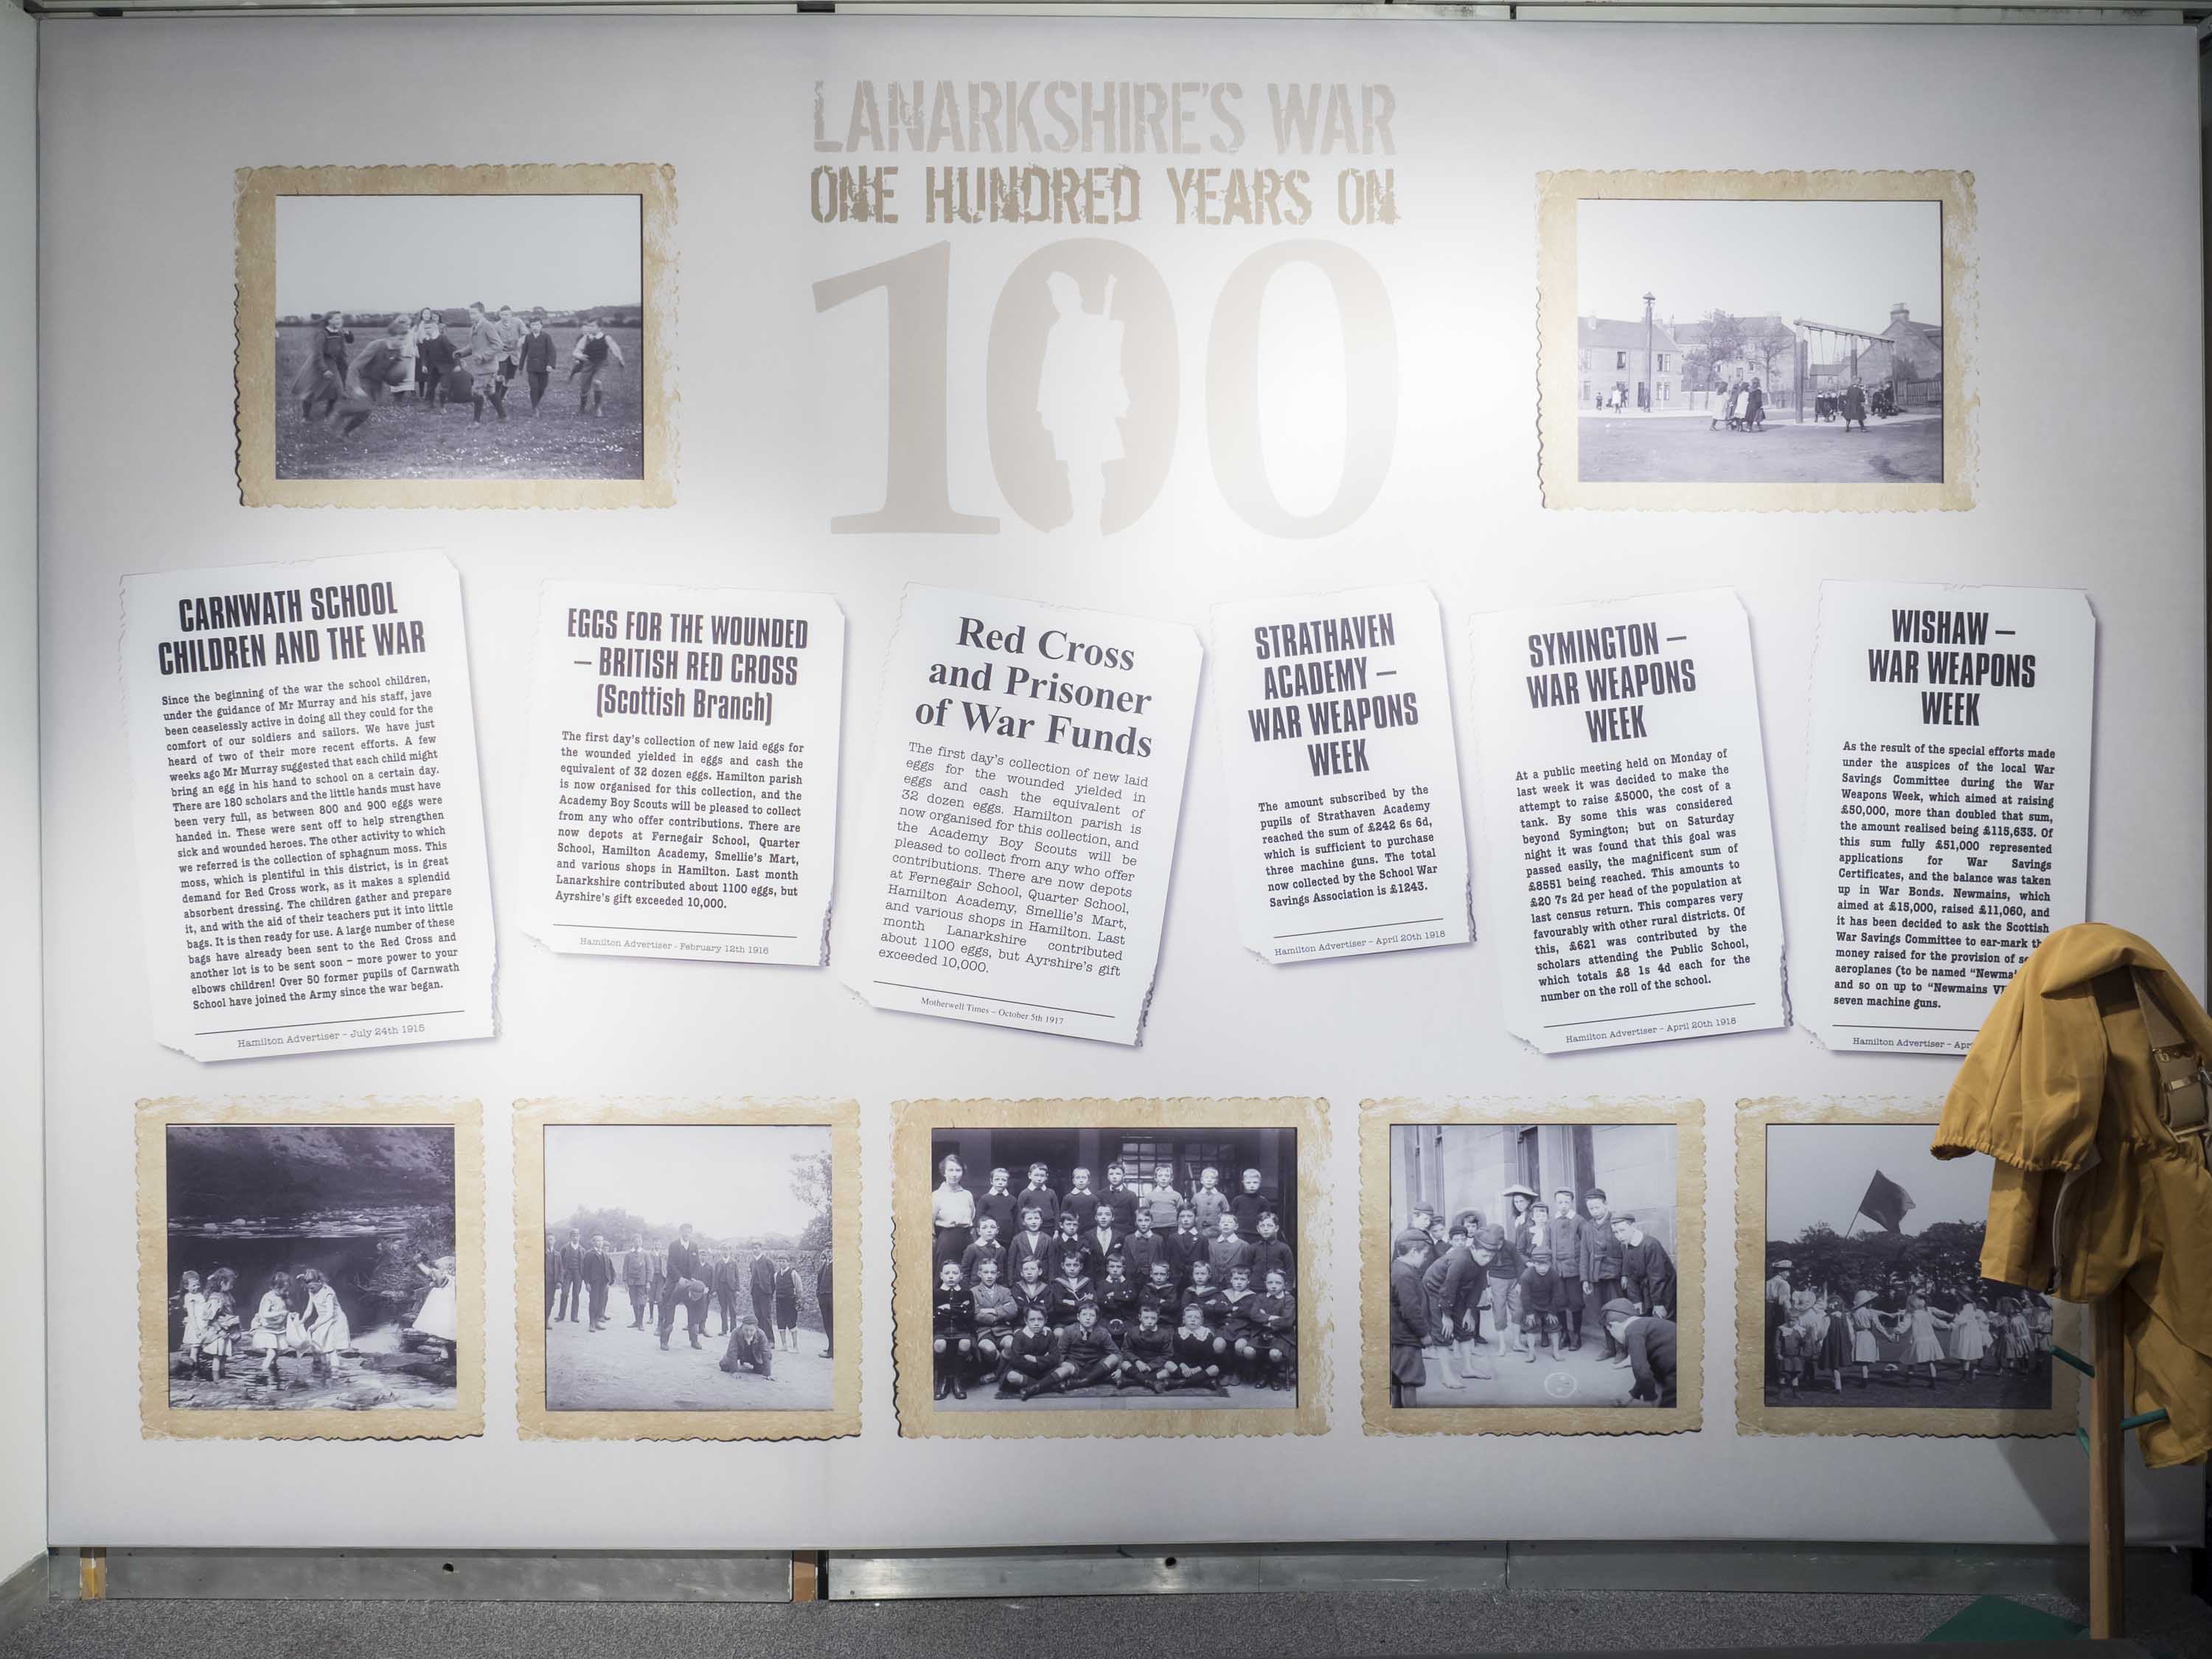 Lanarkshire's War image 1